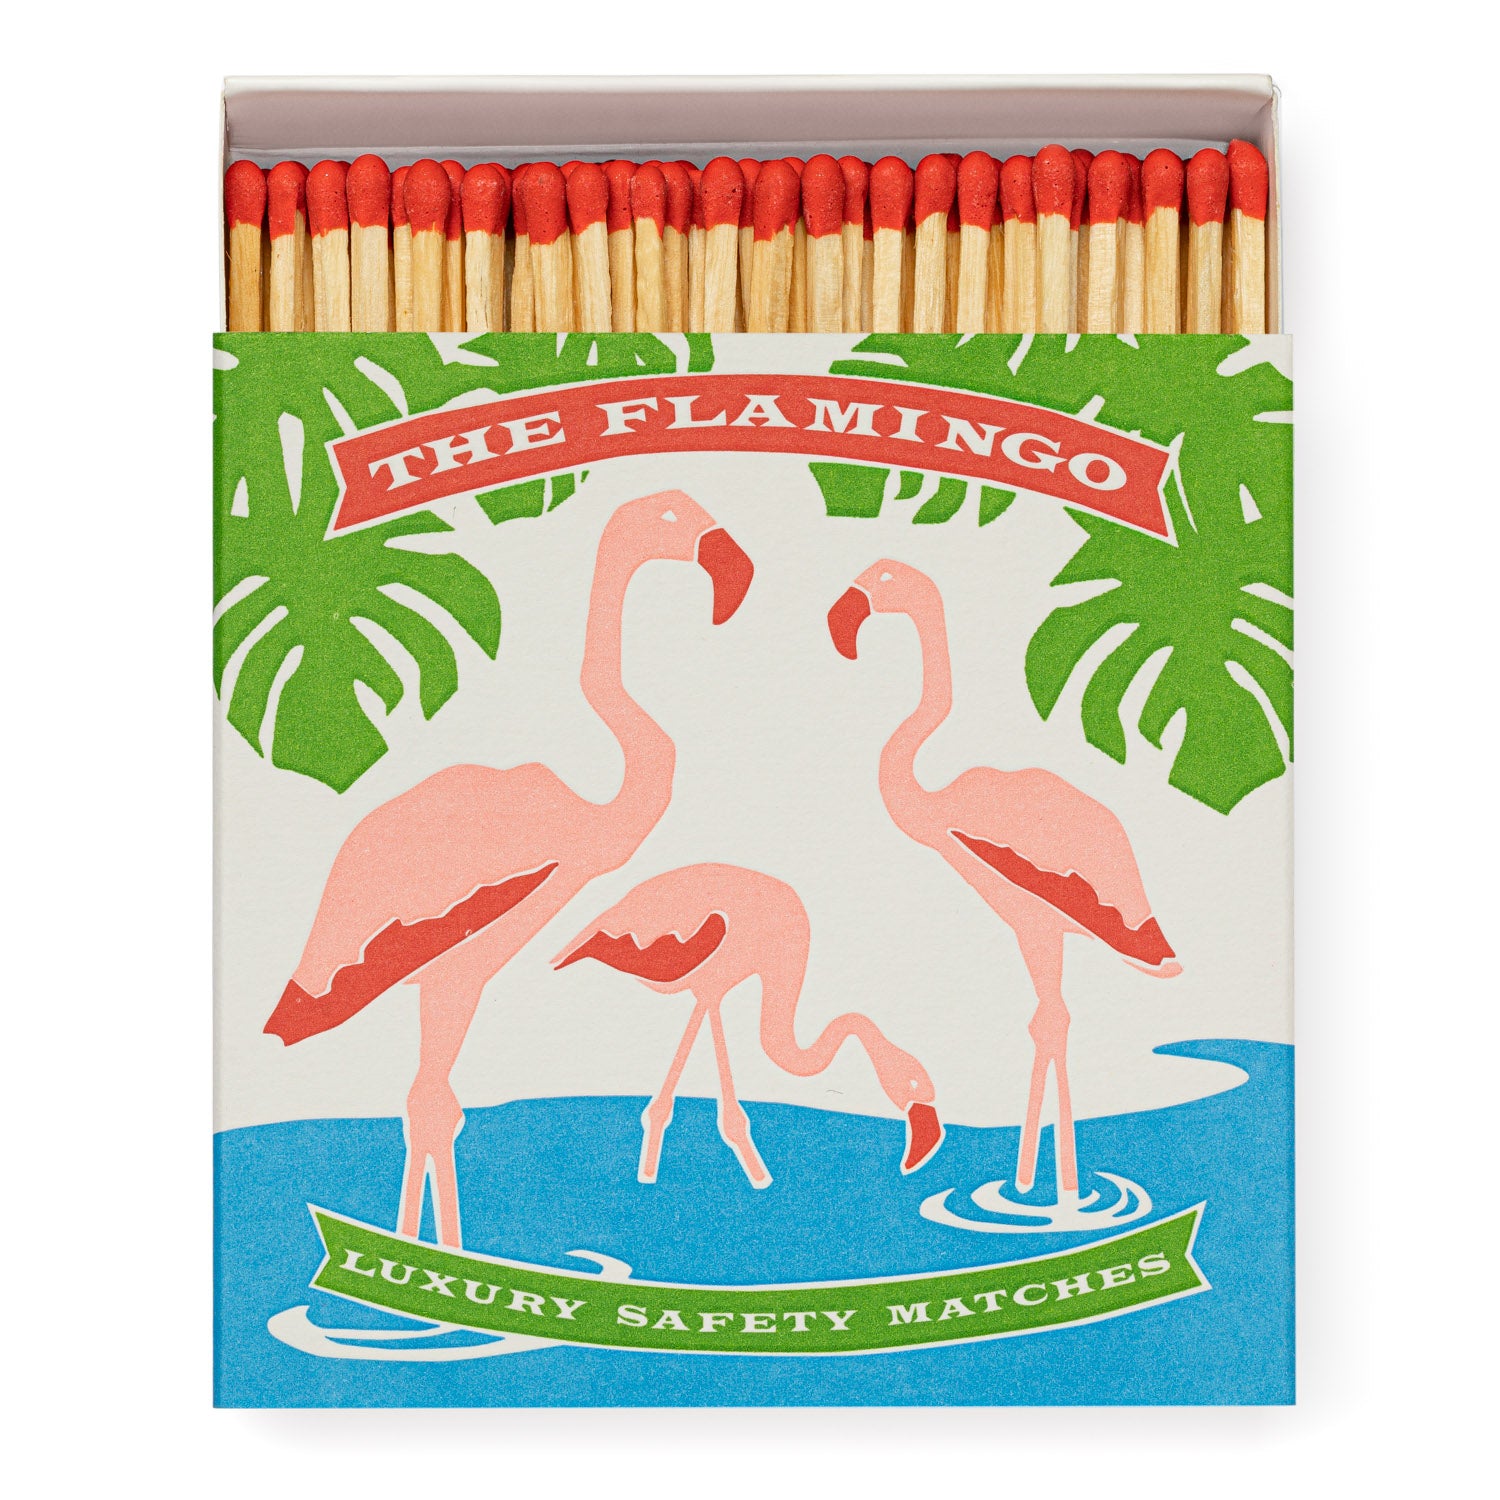 Matches Flamingo